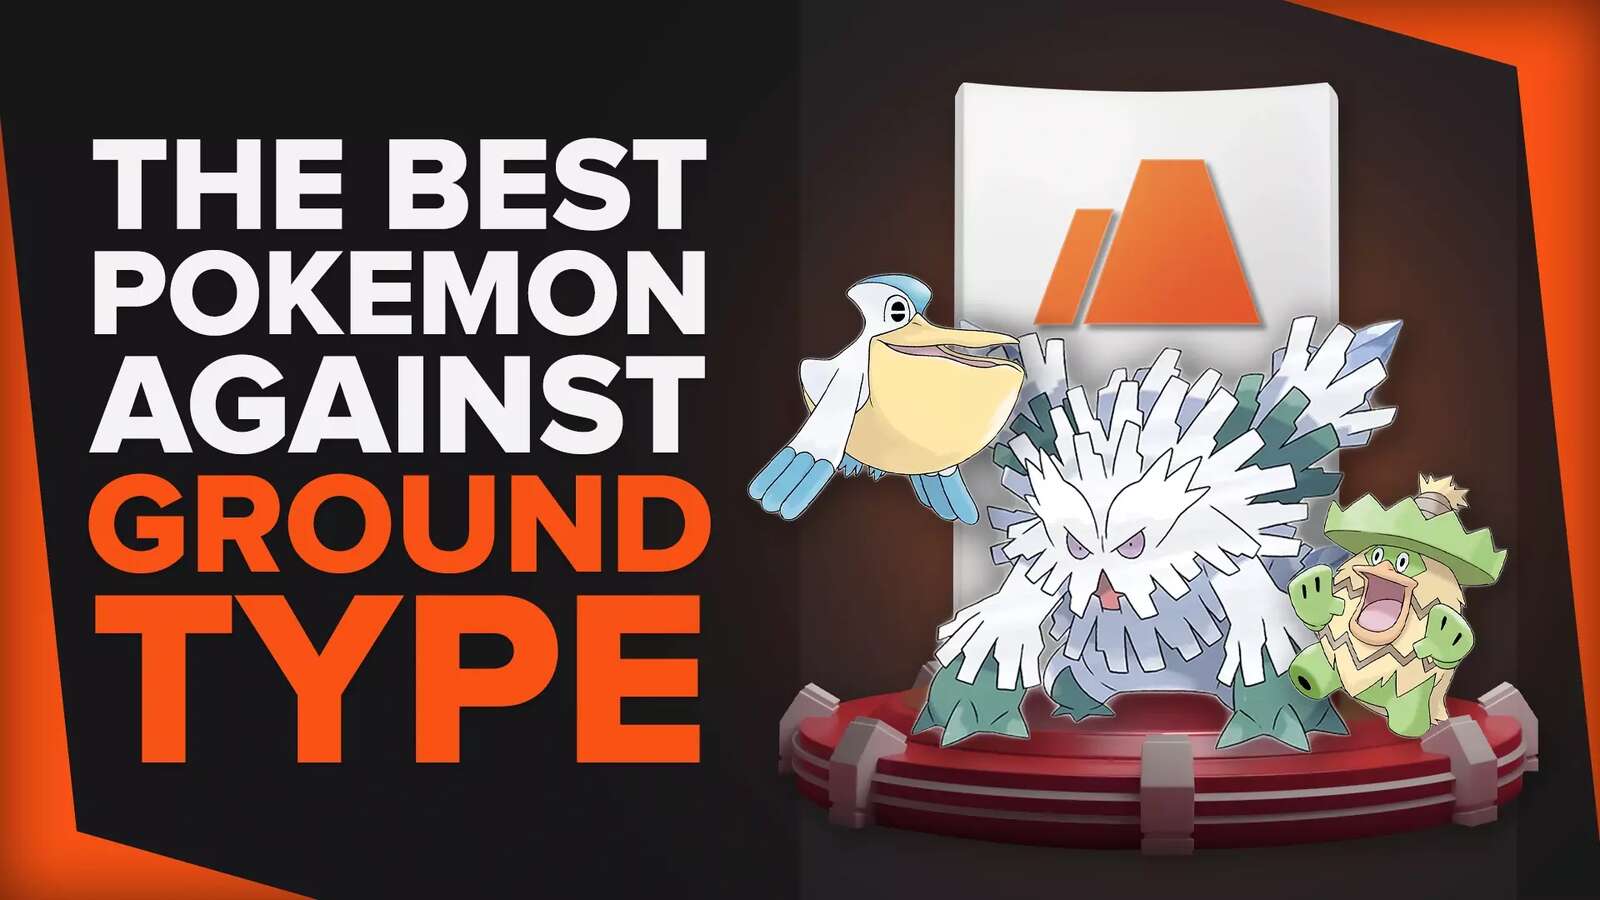 The 10 Best Pokemons Against Ground Type Pokemon [Ranked]